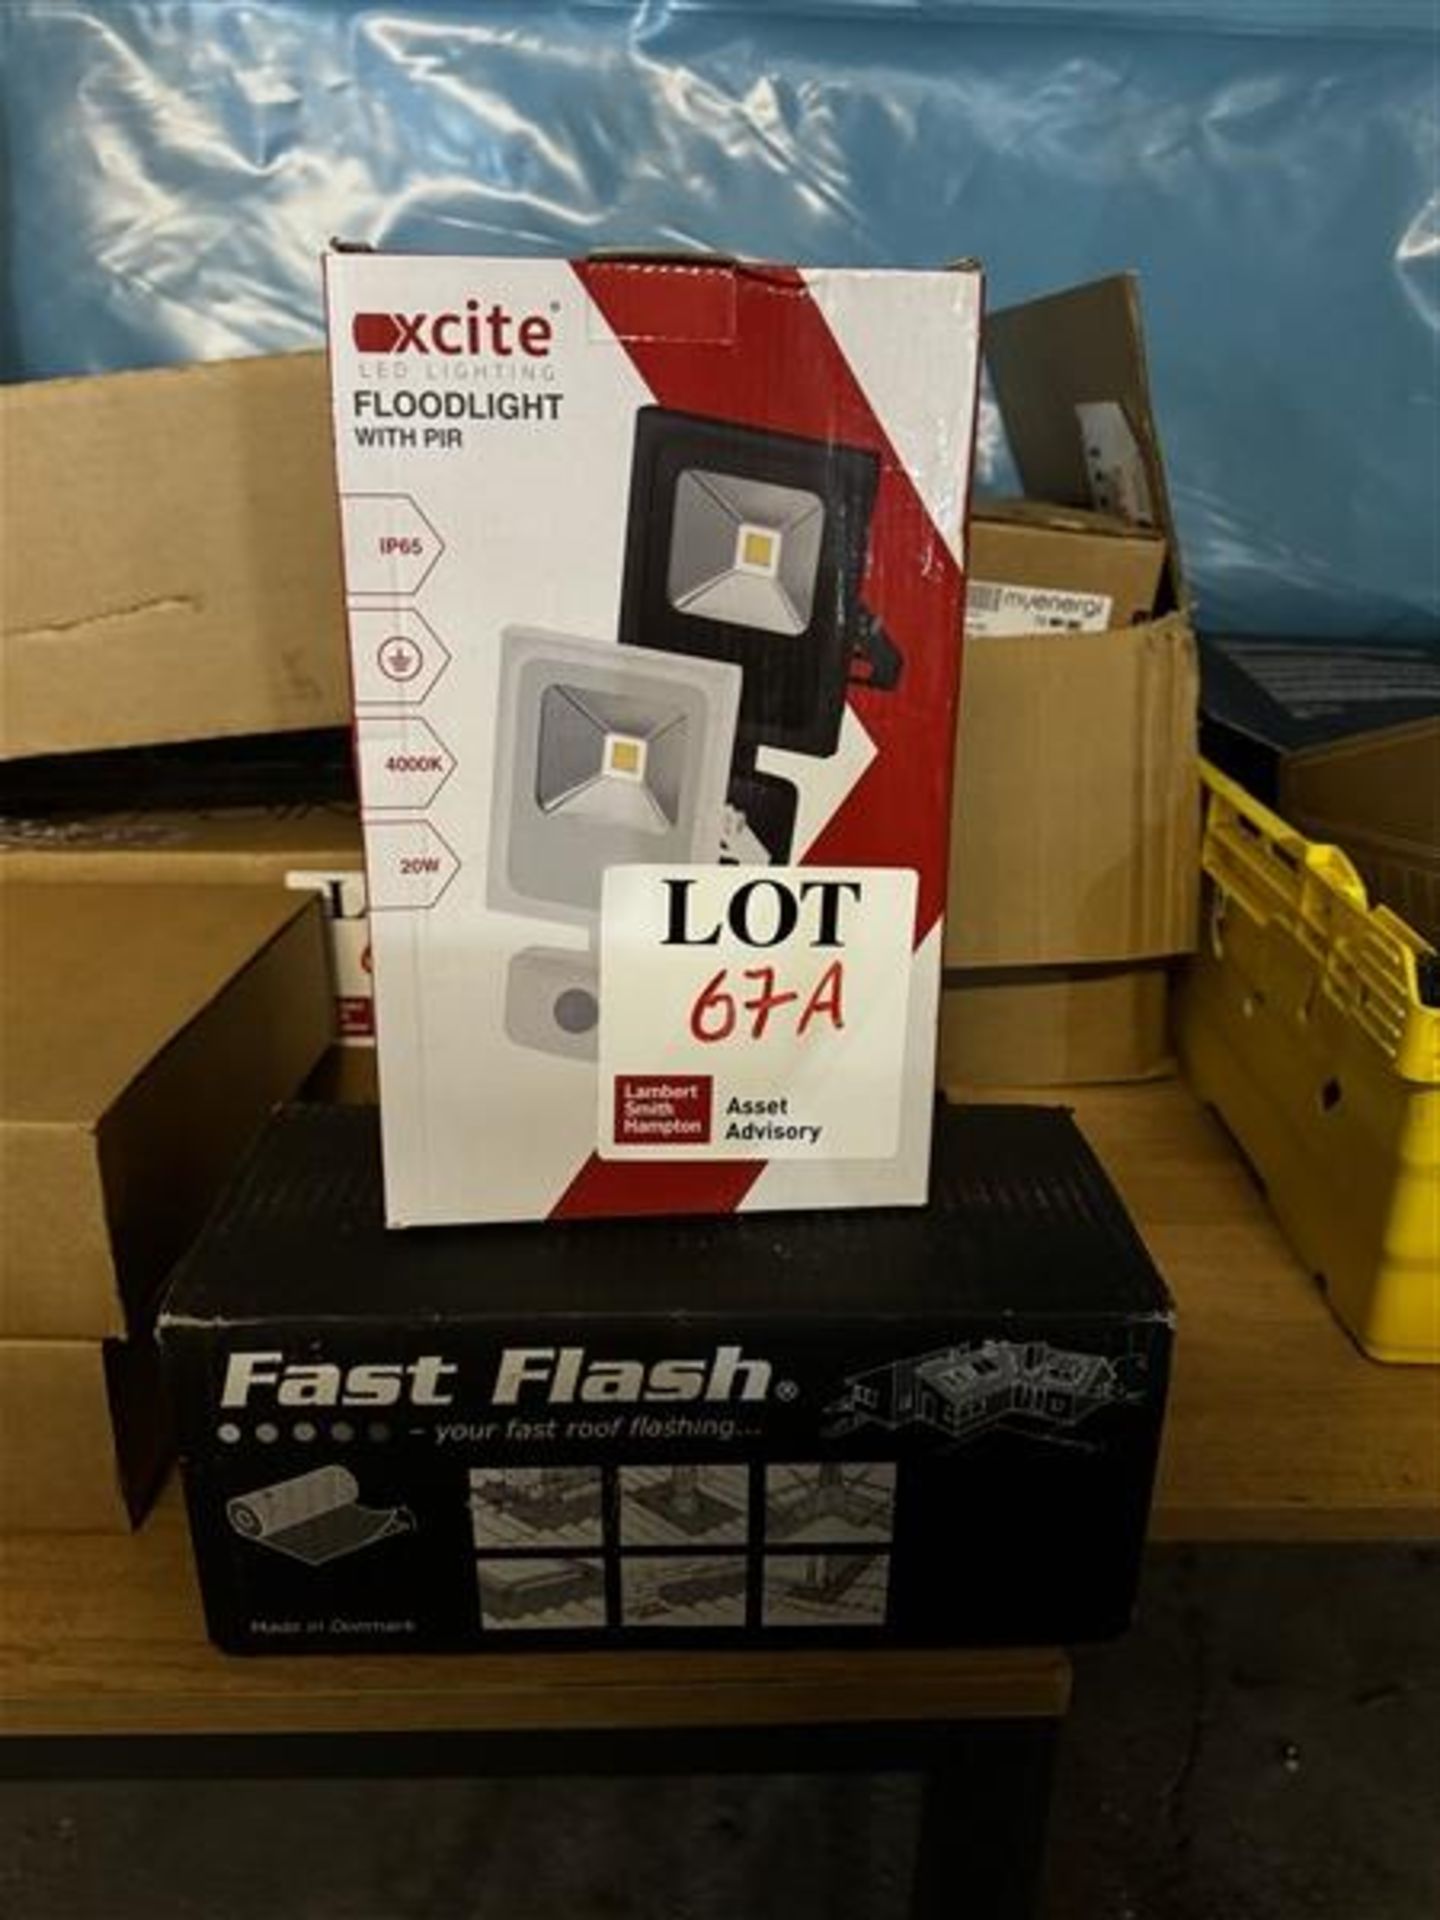 Xcite LED floodlight with PIR